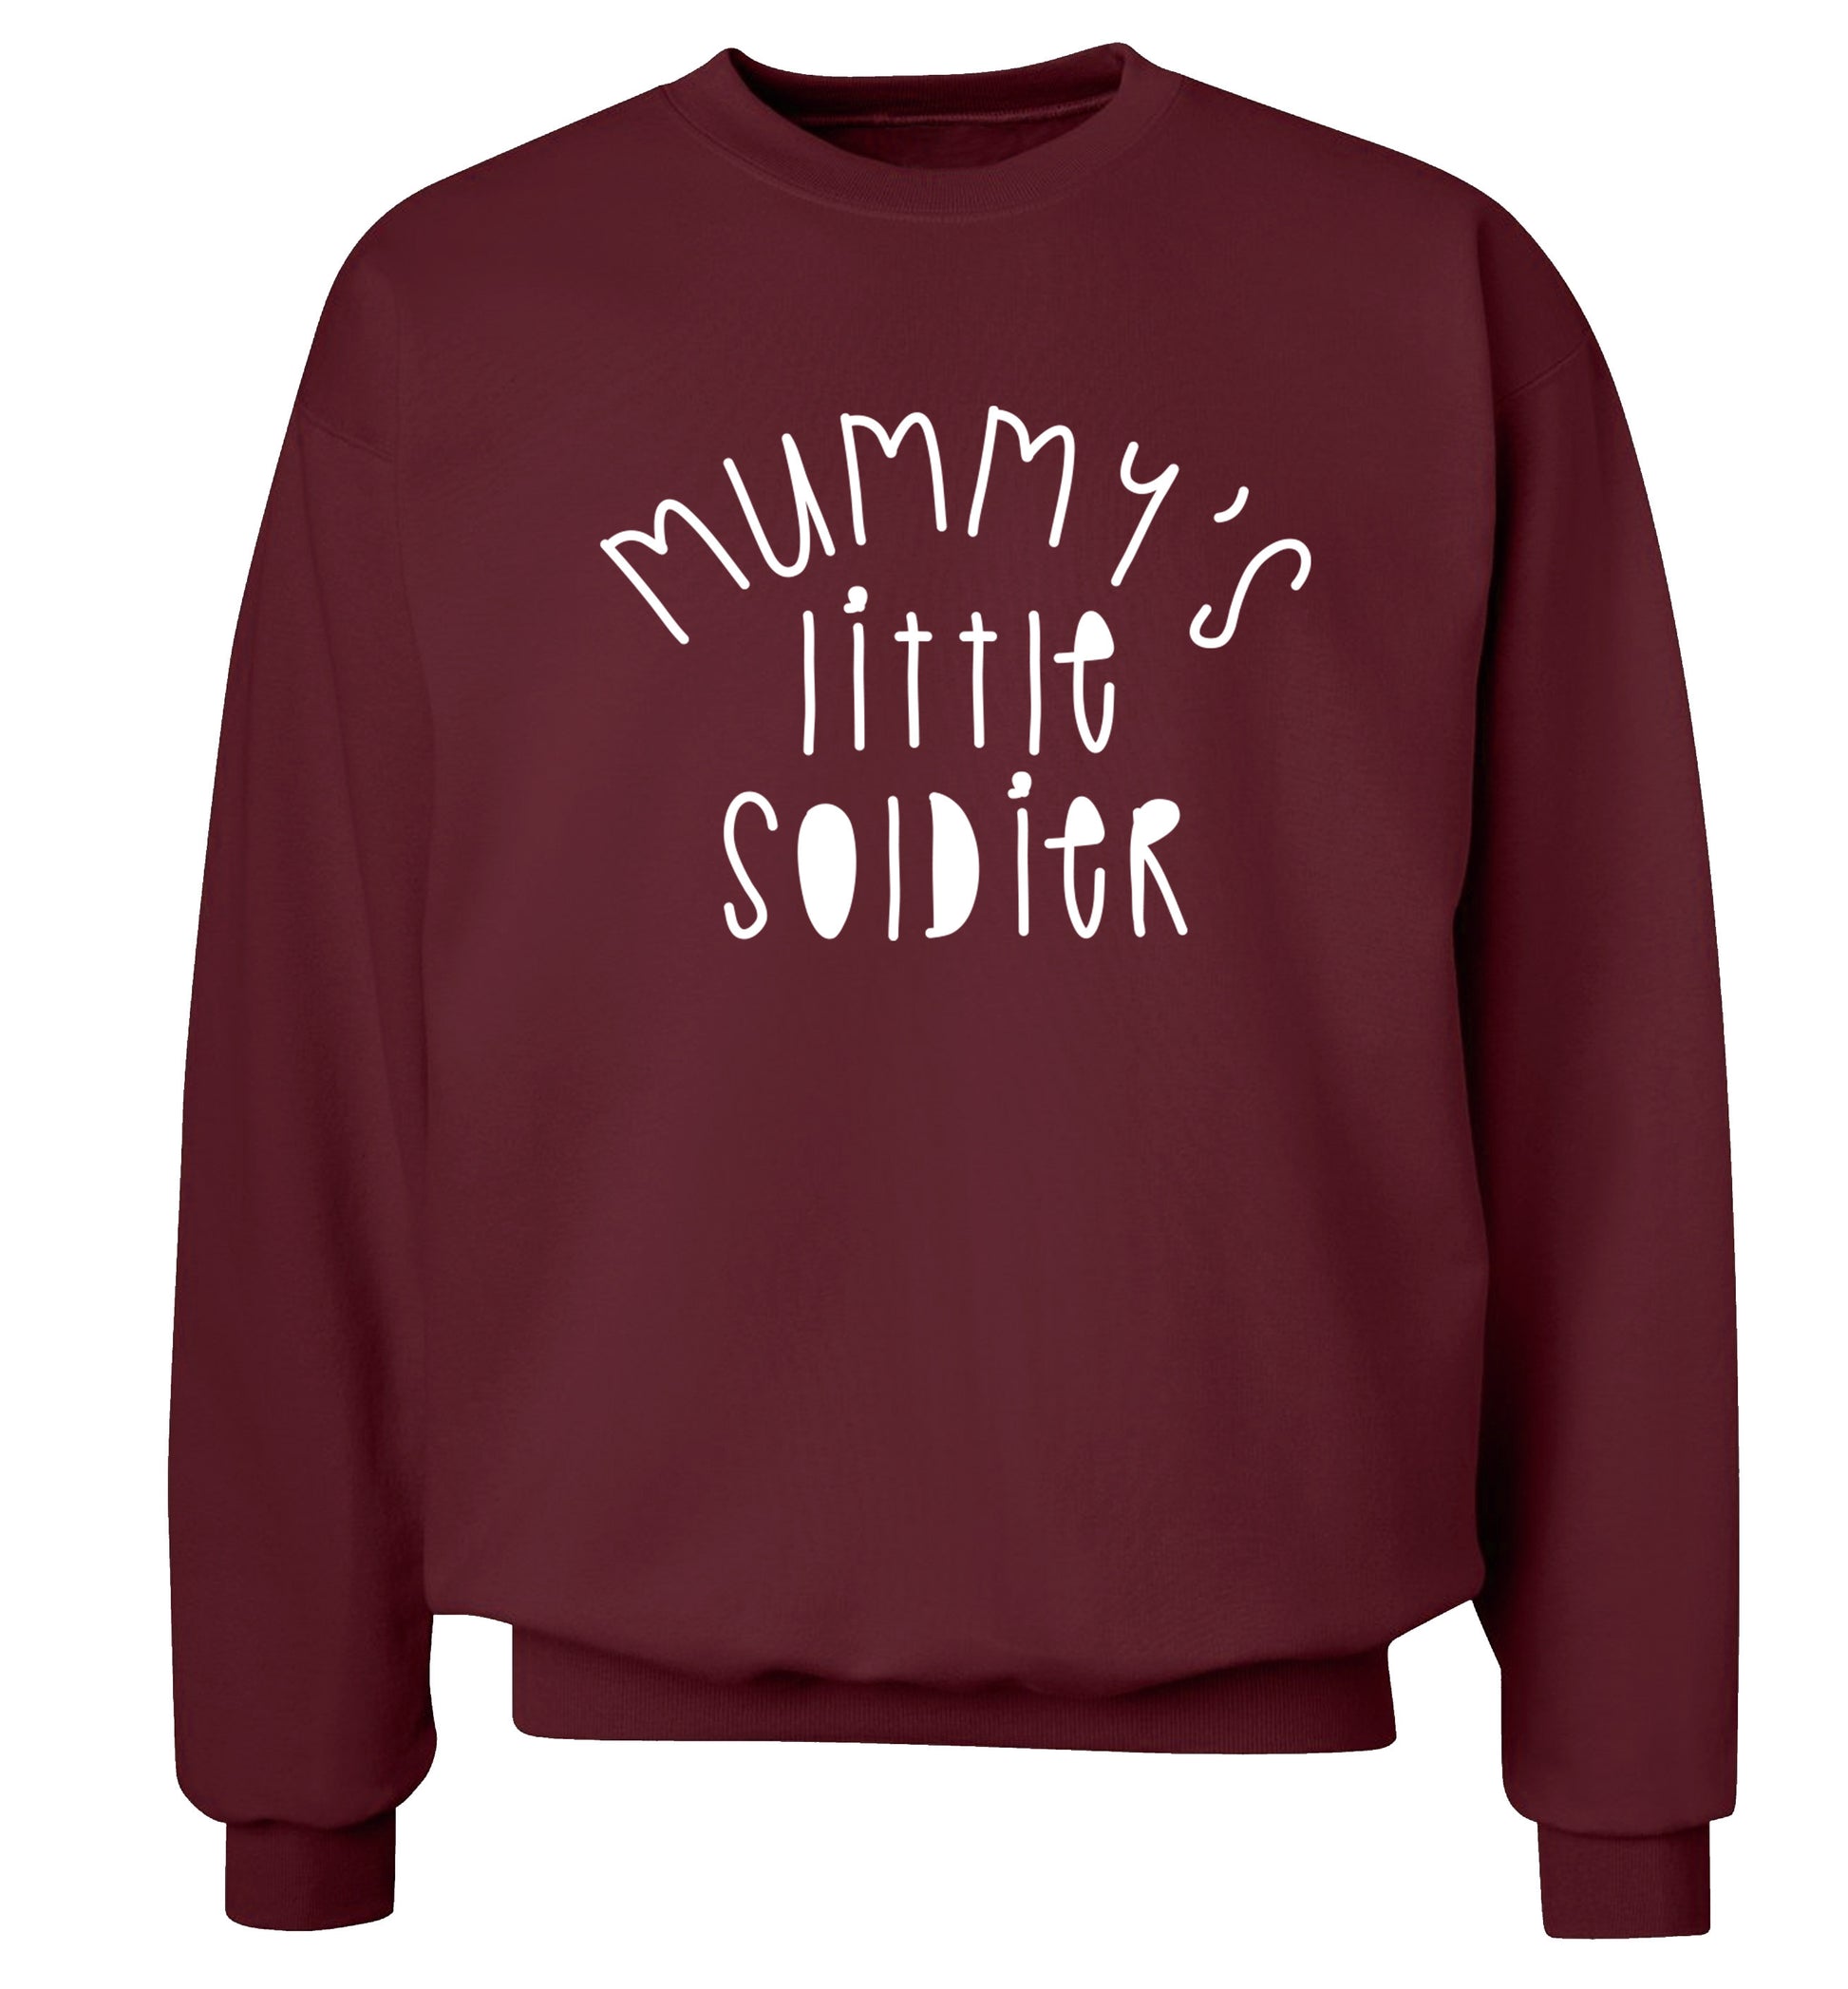 Mummy's little soldier Adult's unisex maroon Sweater 2XL